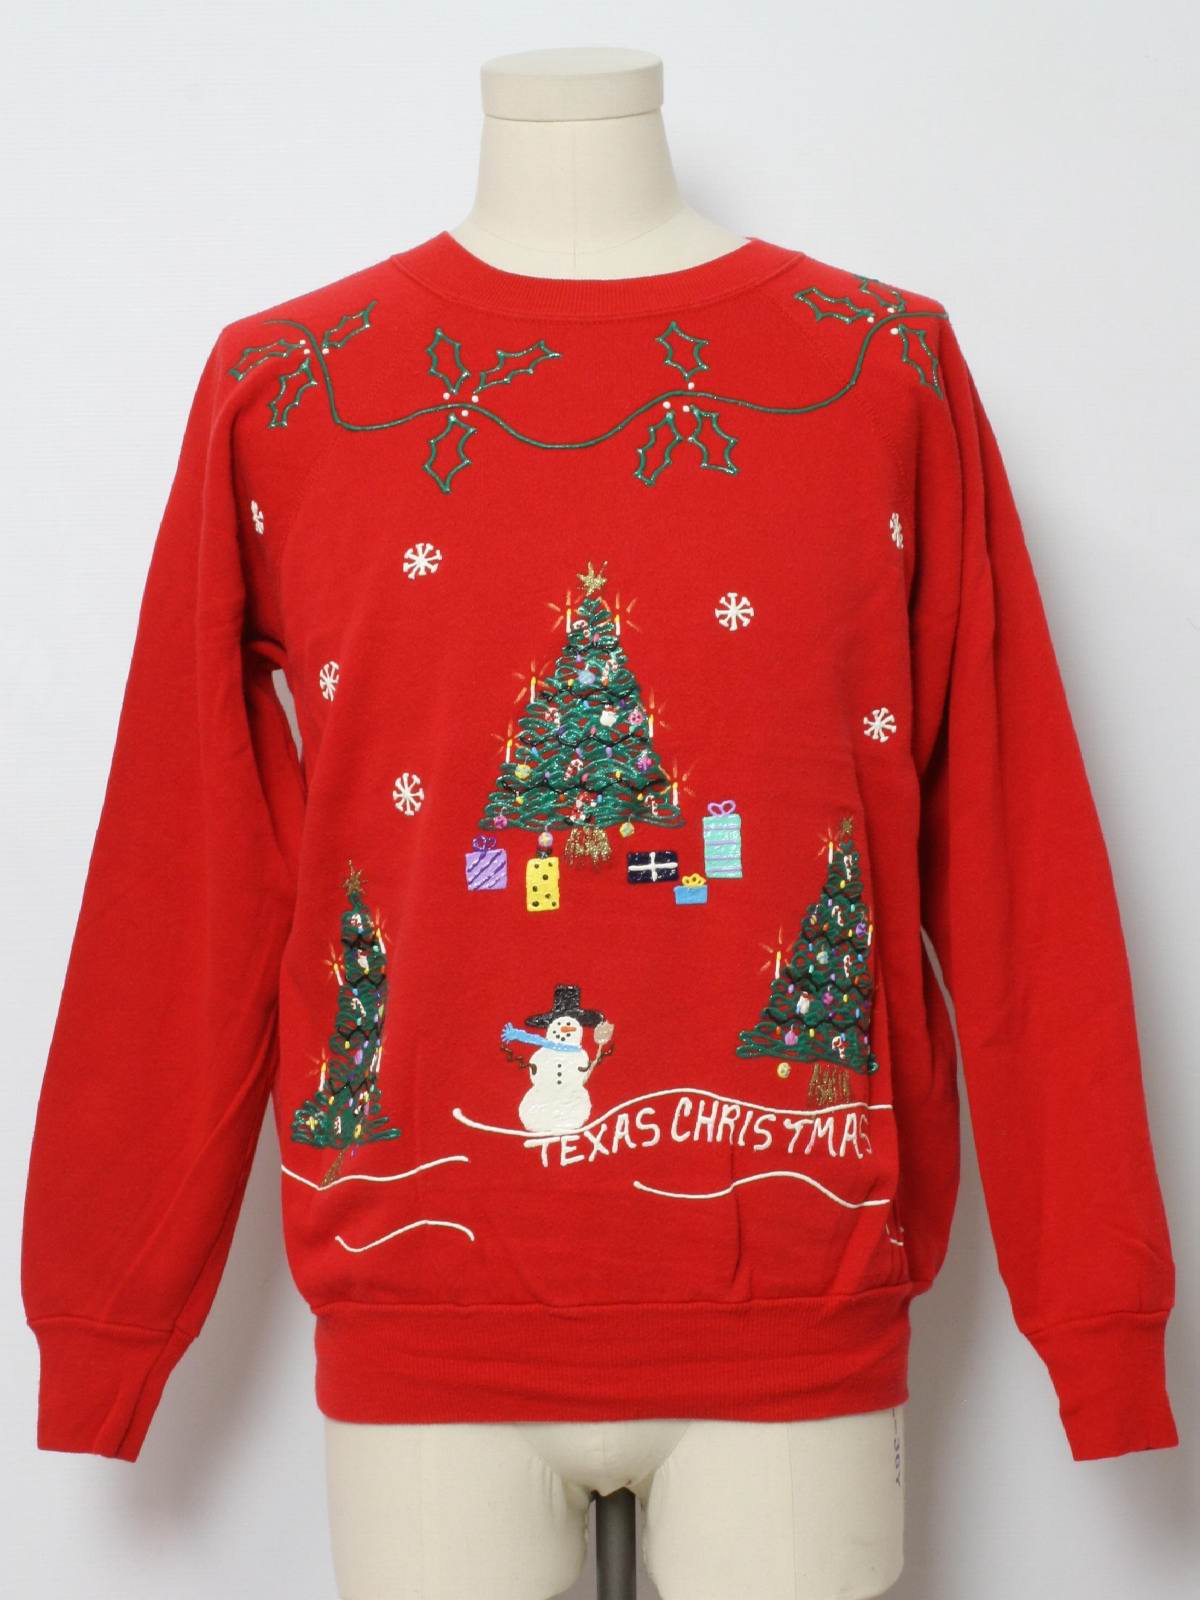 Pin on 80s / 90s Christmas Sweatshirts